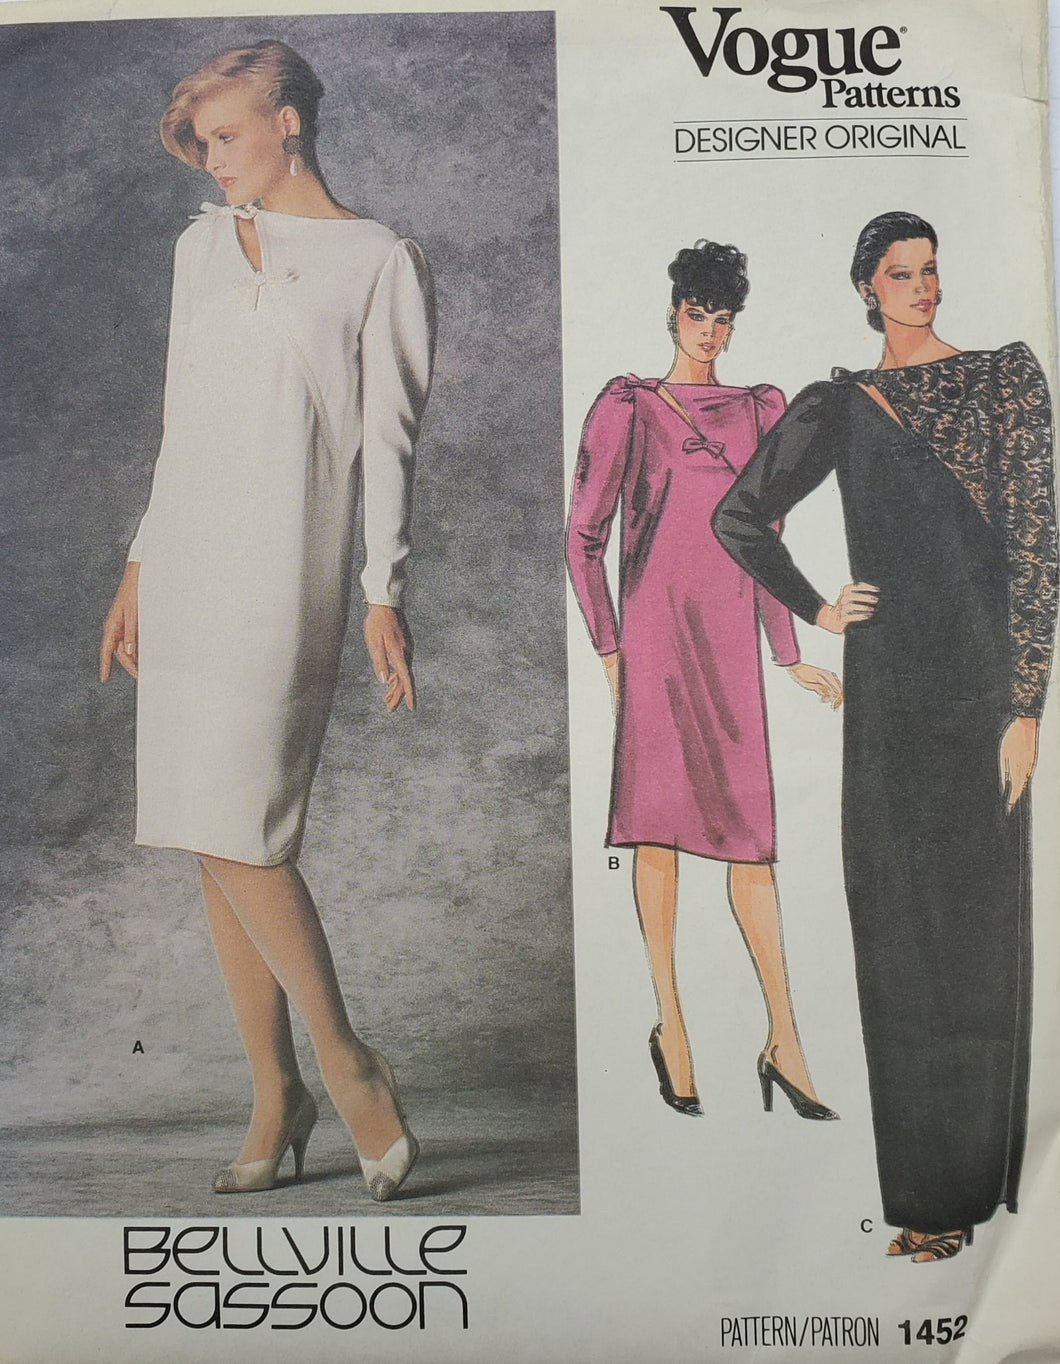 Vogue 1452 Bellville Sassoon, Formal Dresses